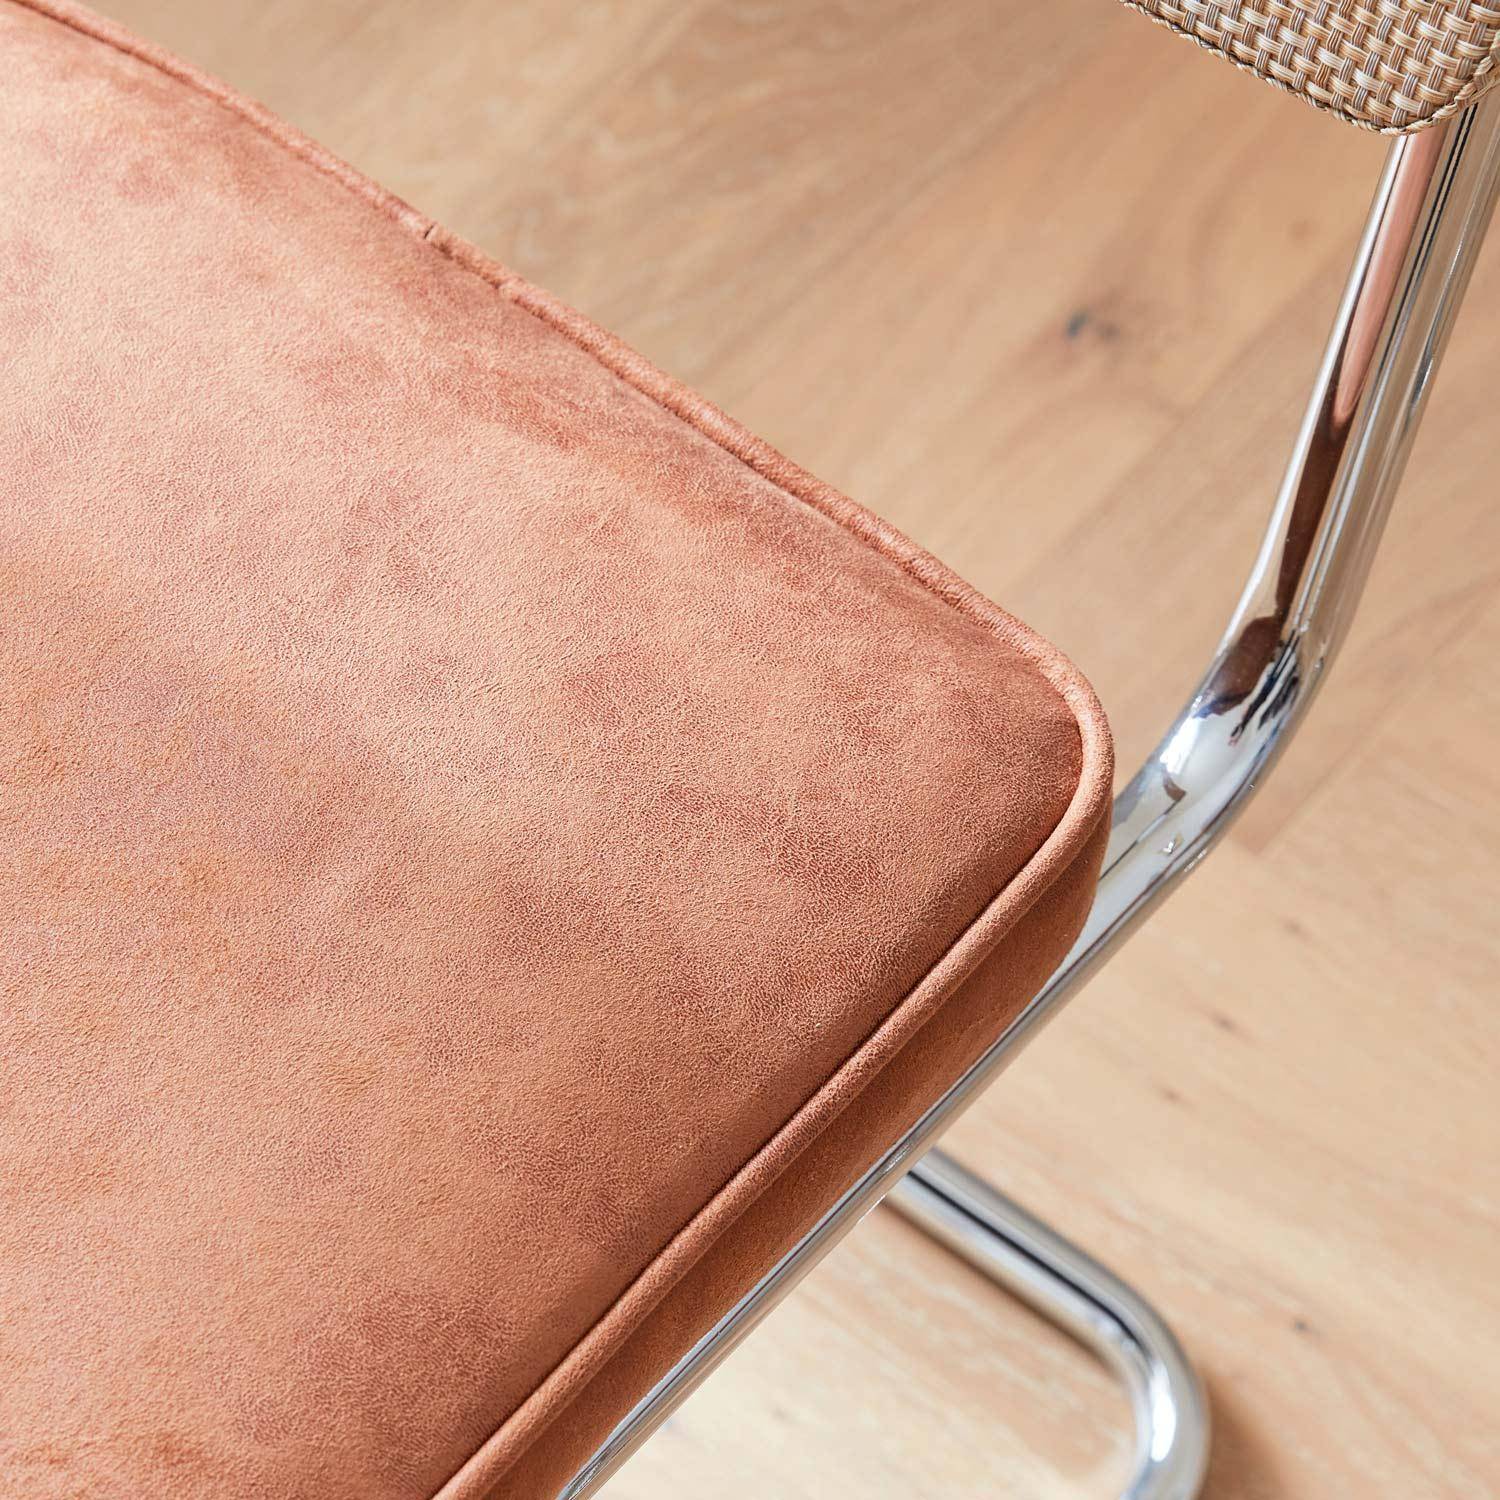 2 sillas cantilever - Maja - tela marrón claro y resina efecto ratán, 46 x 54,5 x 84,5cm  ,sweeek,Photo3